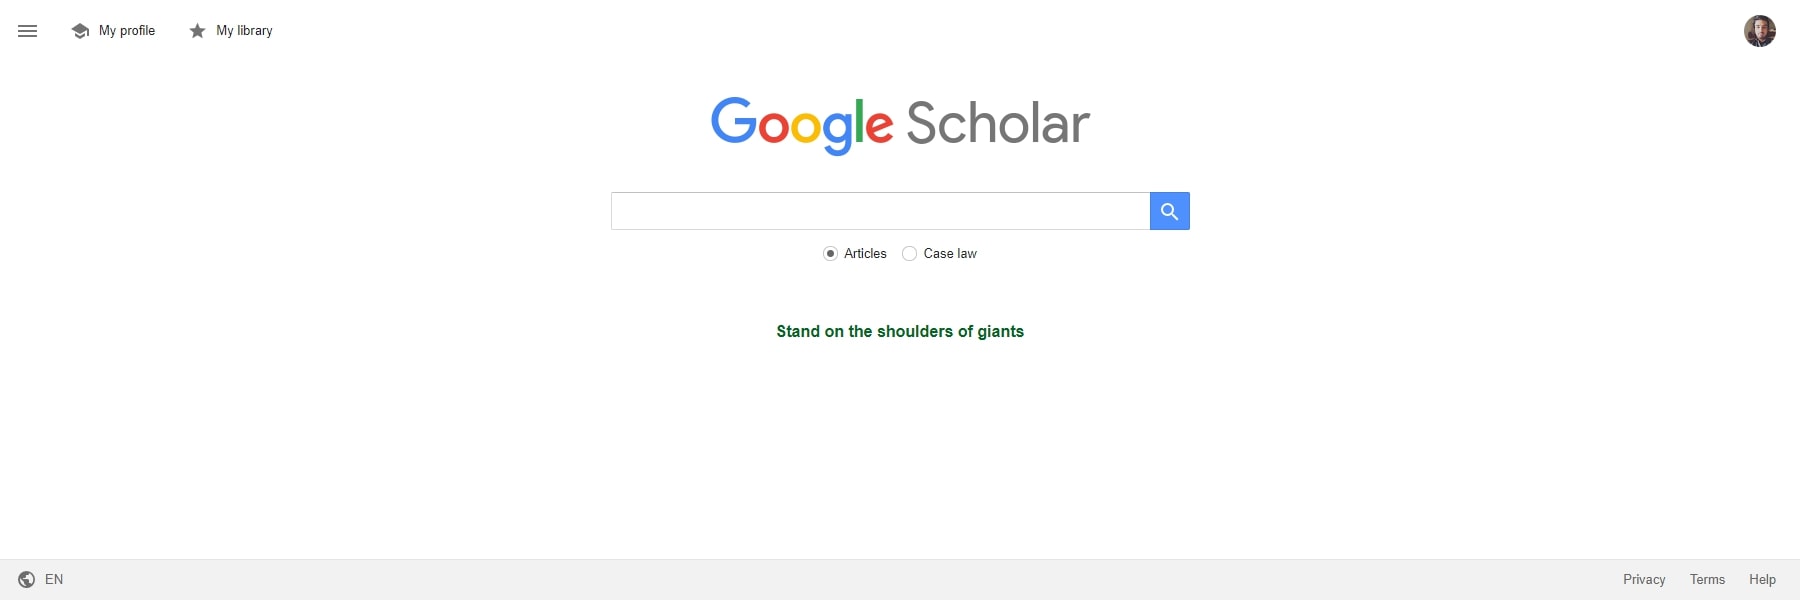 Strumenti di intelligenza artificiale di Google Scholar per l'istruzione